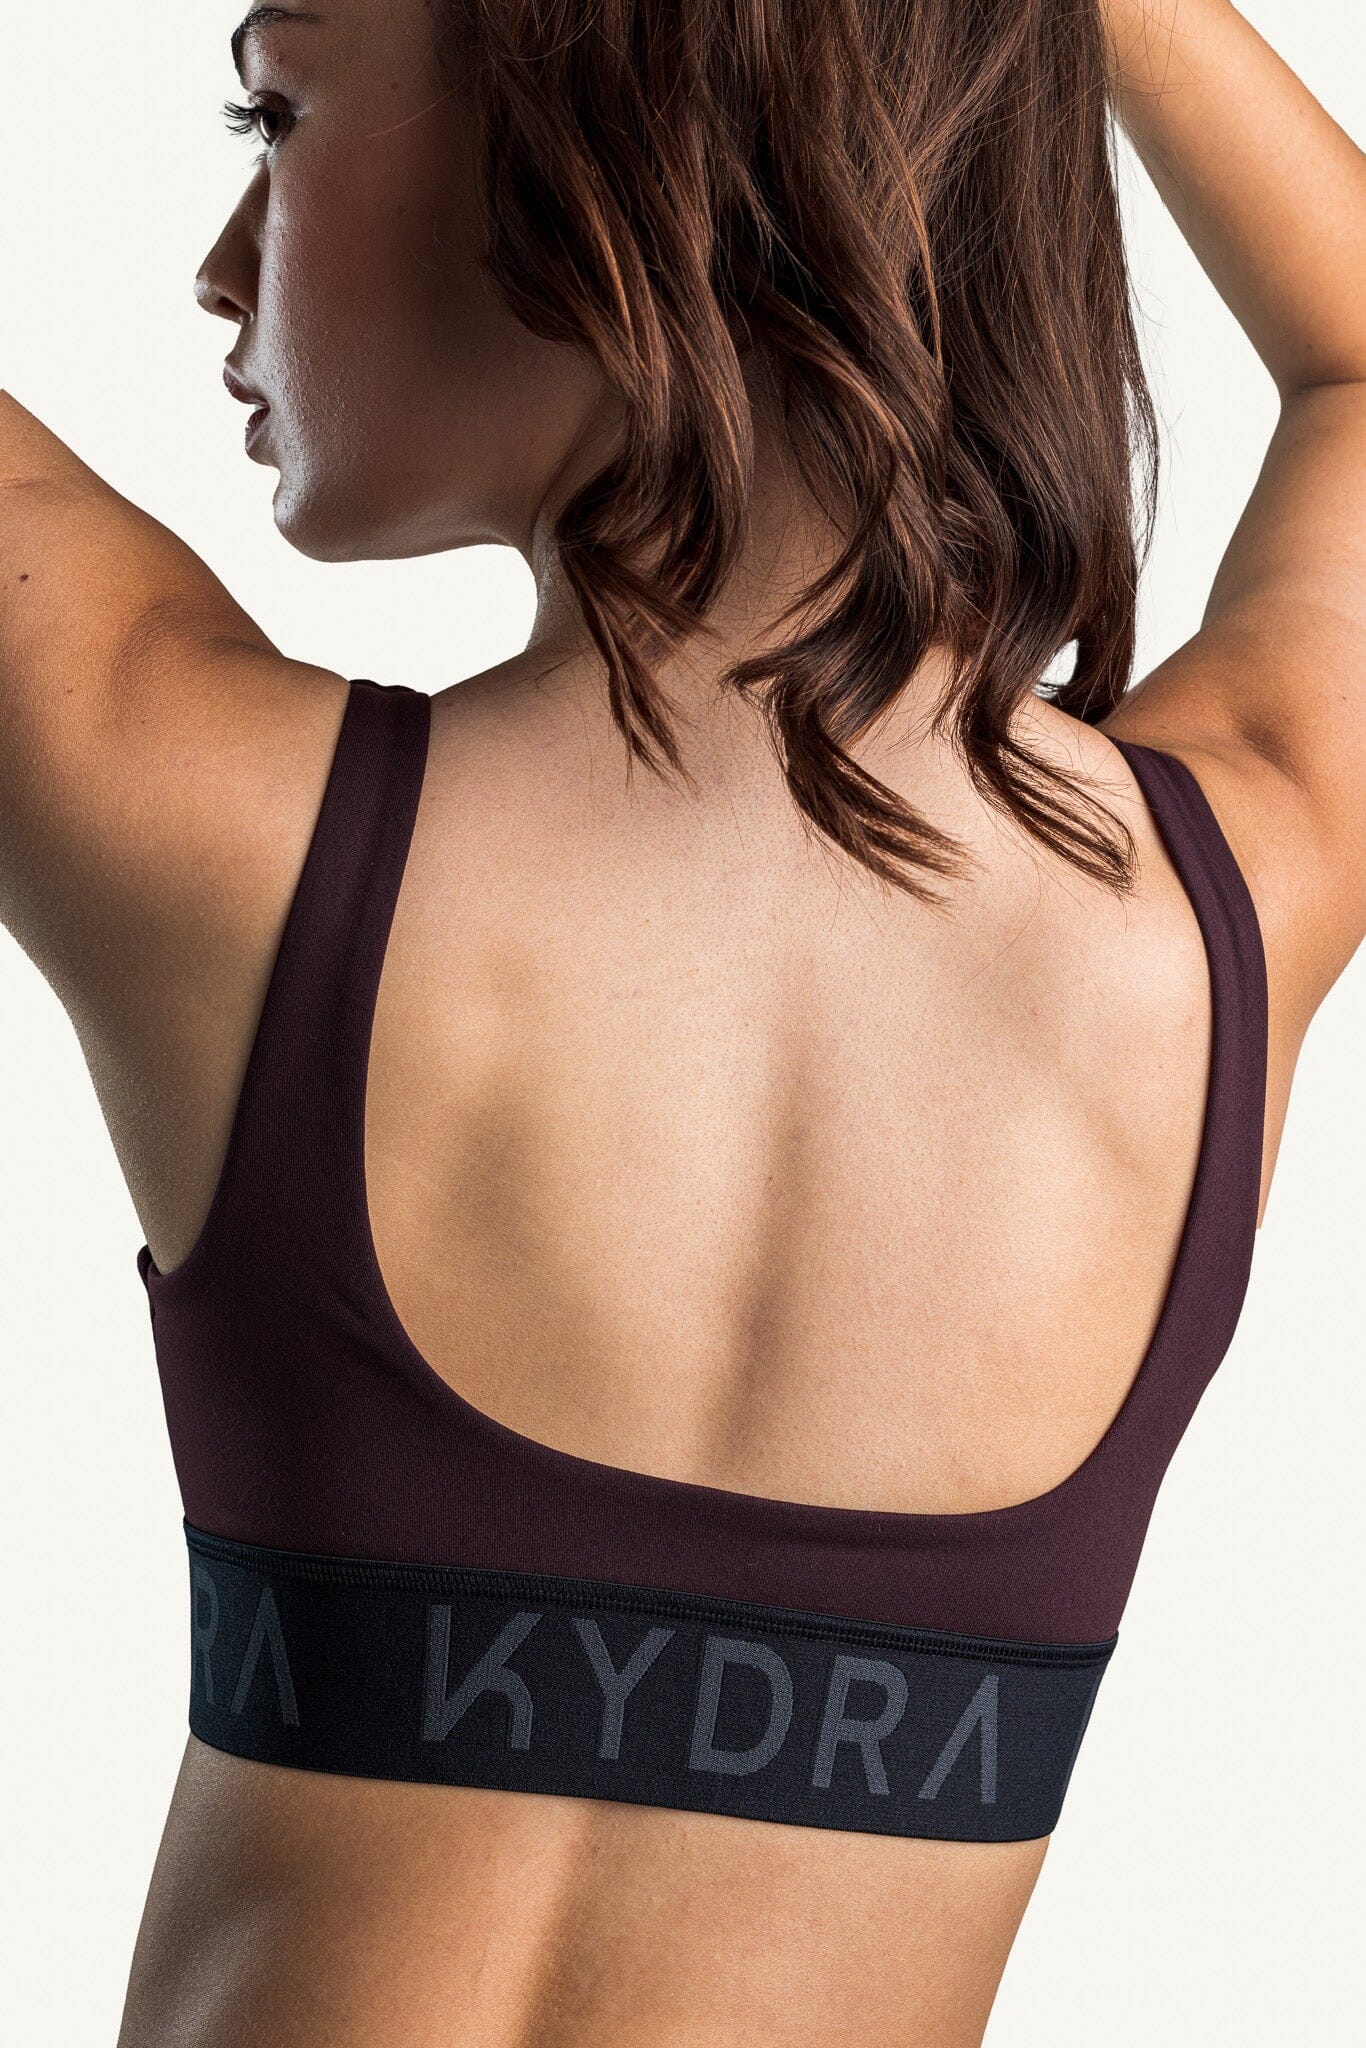 Kydra livia longline sports bra xs, Women's Fashion, Activewear on